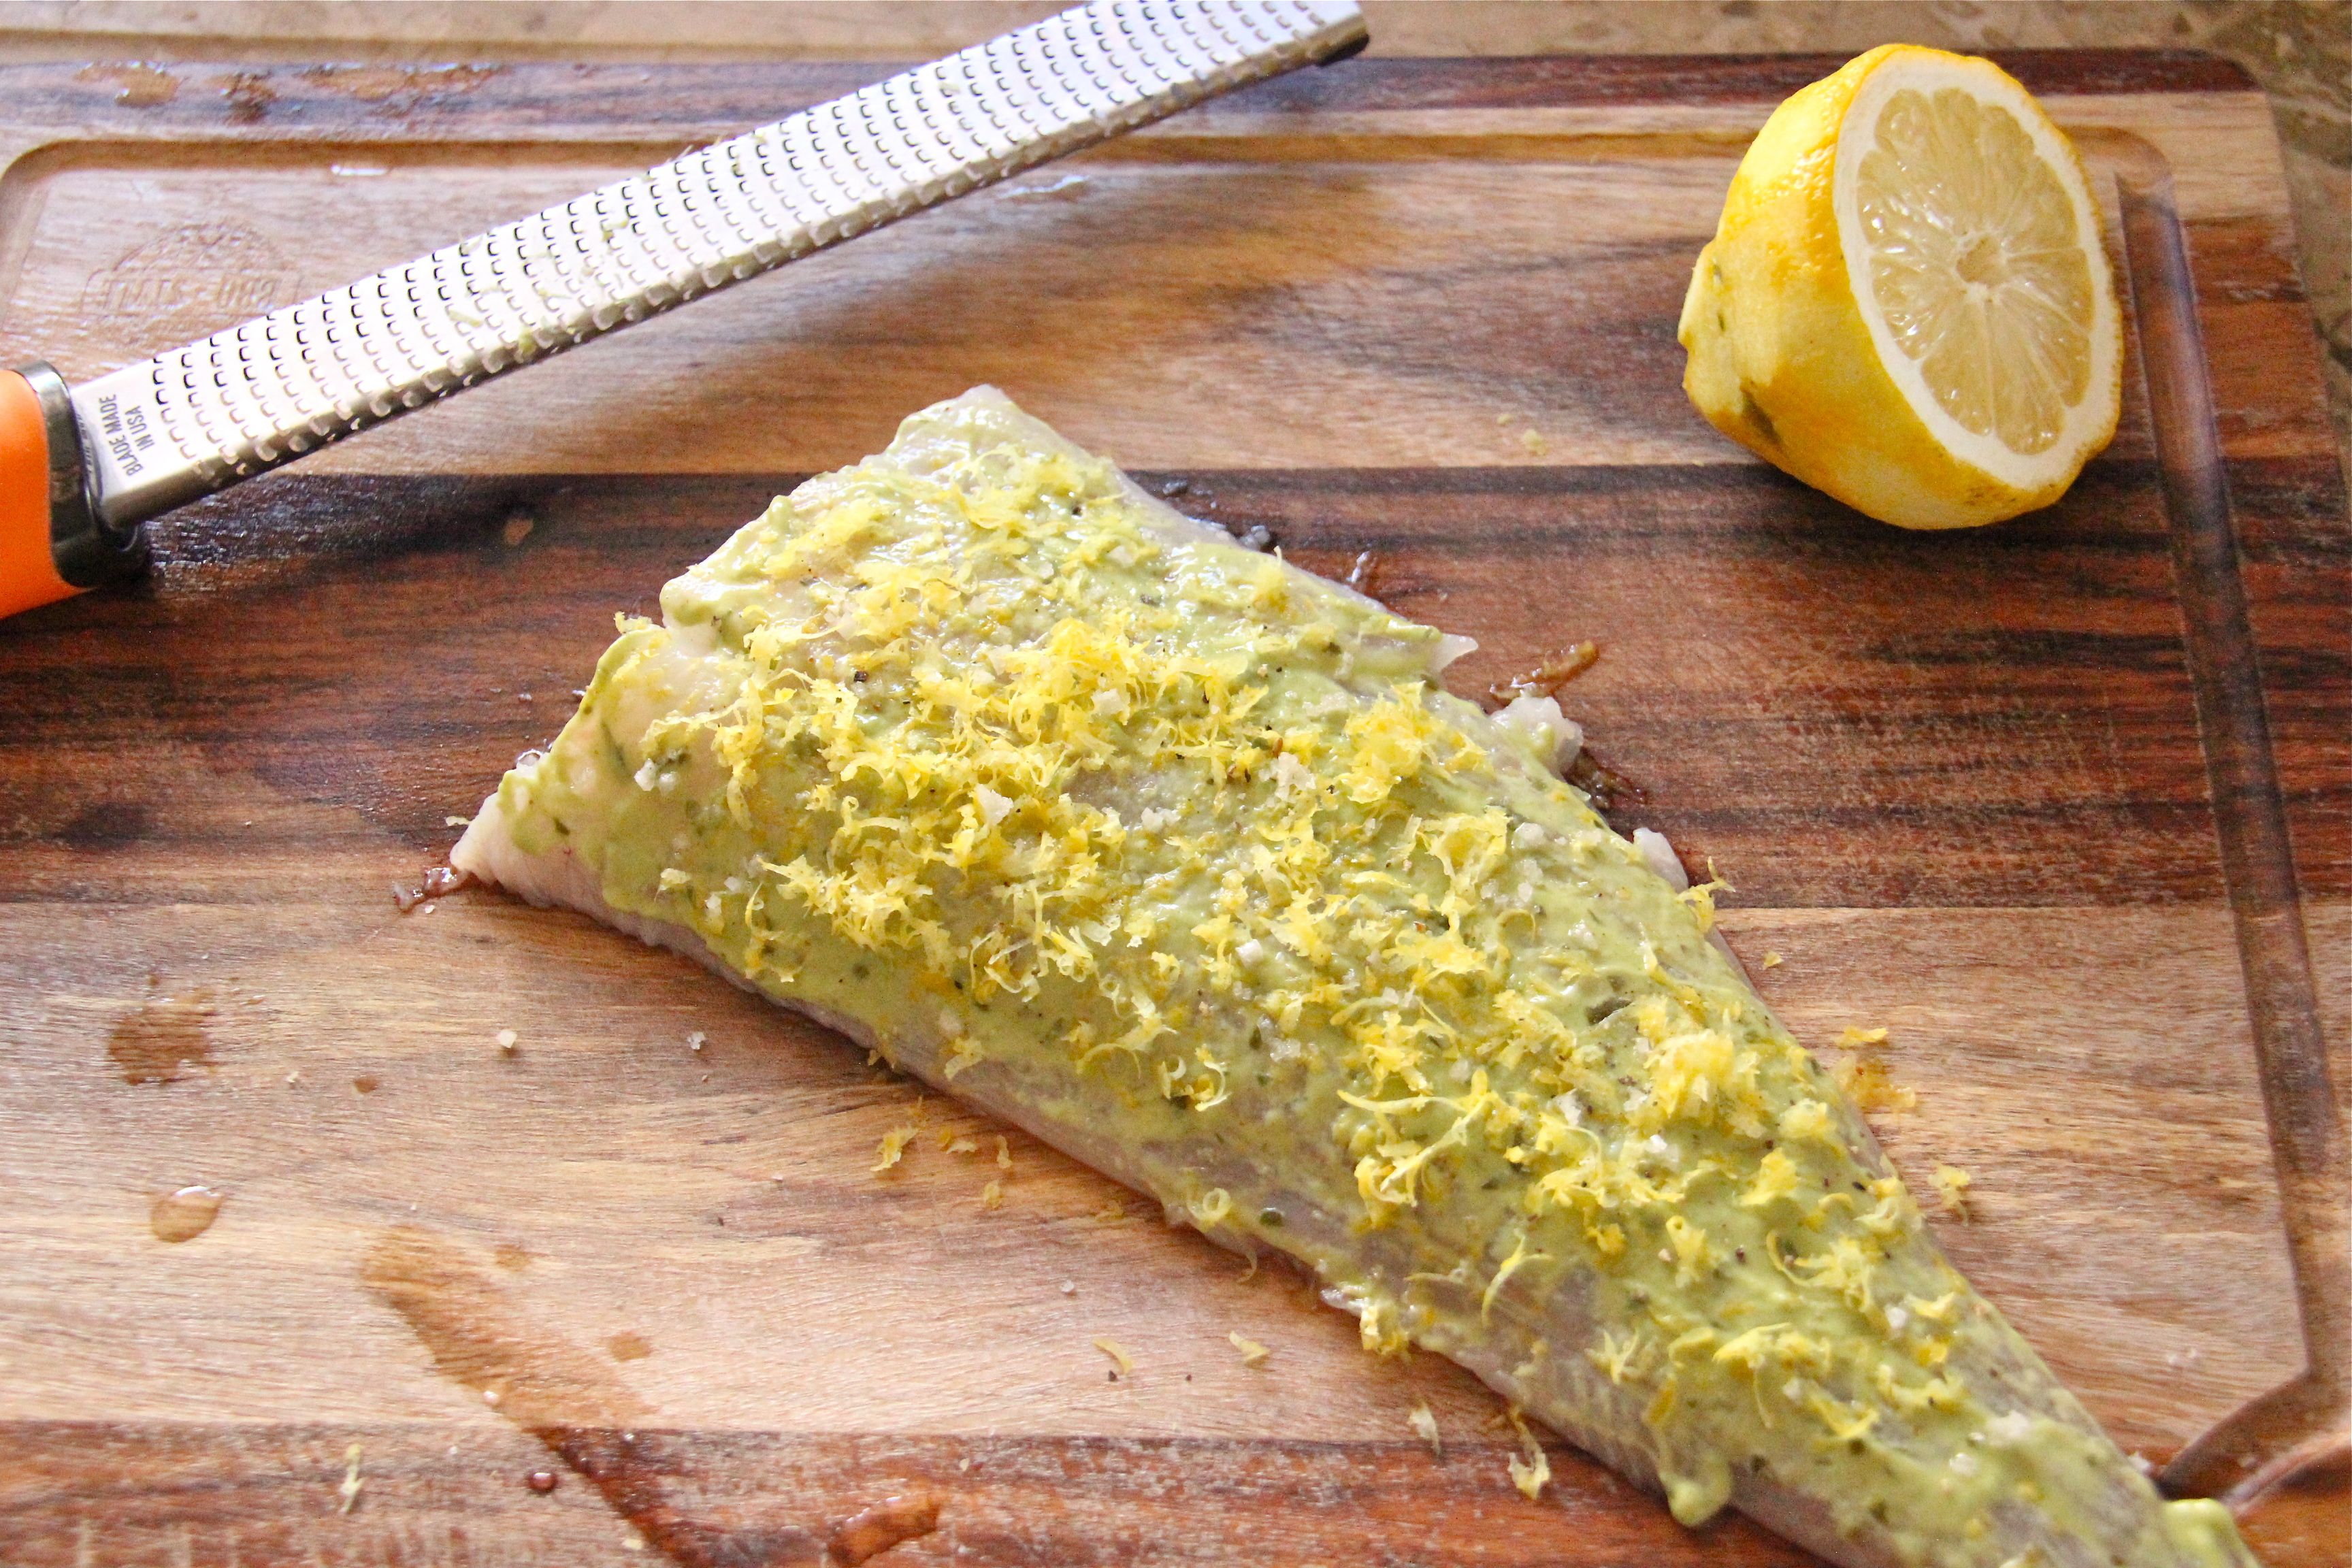 lemon and wholegrain mustard spread on a pollock fillet